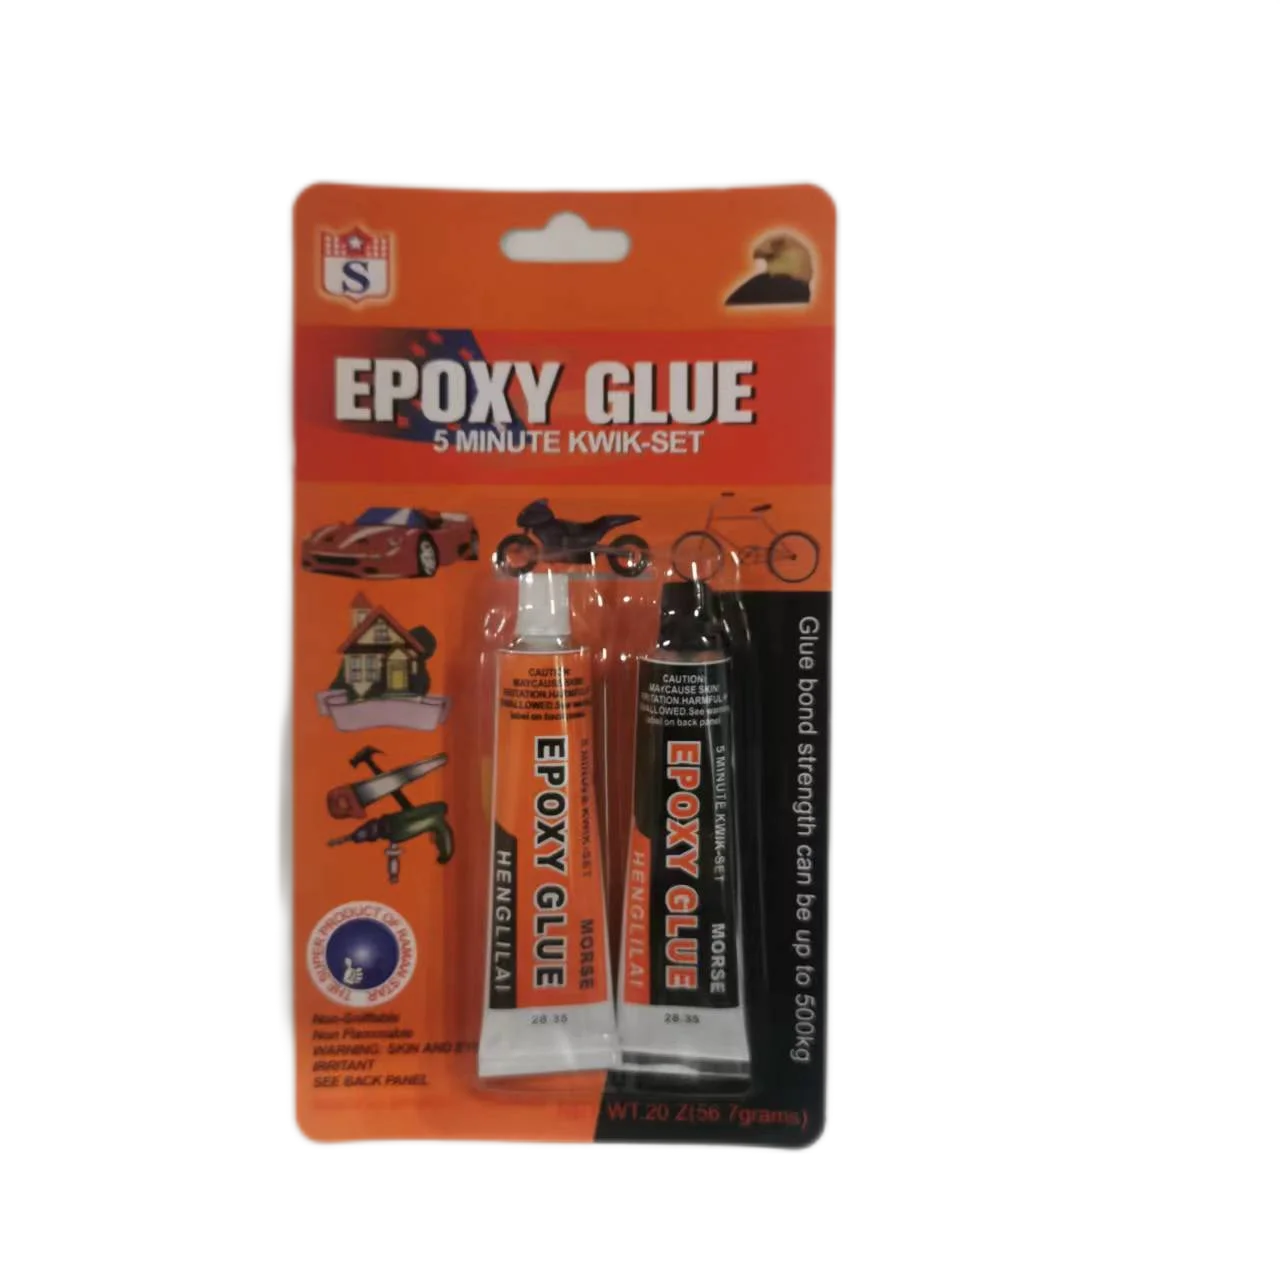 Epoxy Glue 5MINUTE KWIK SET